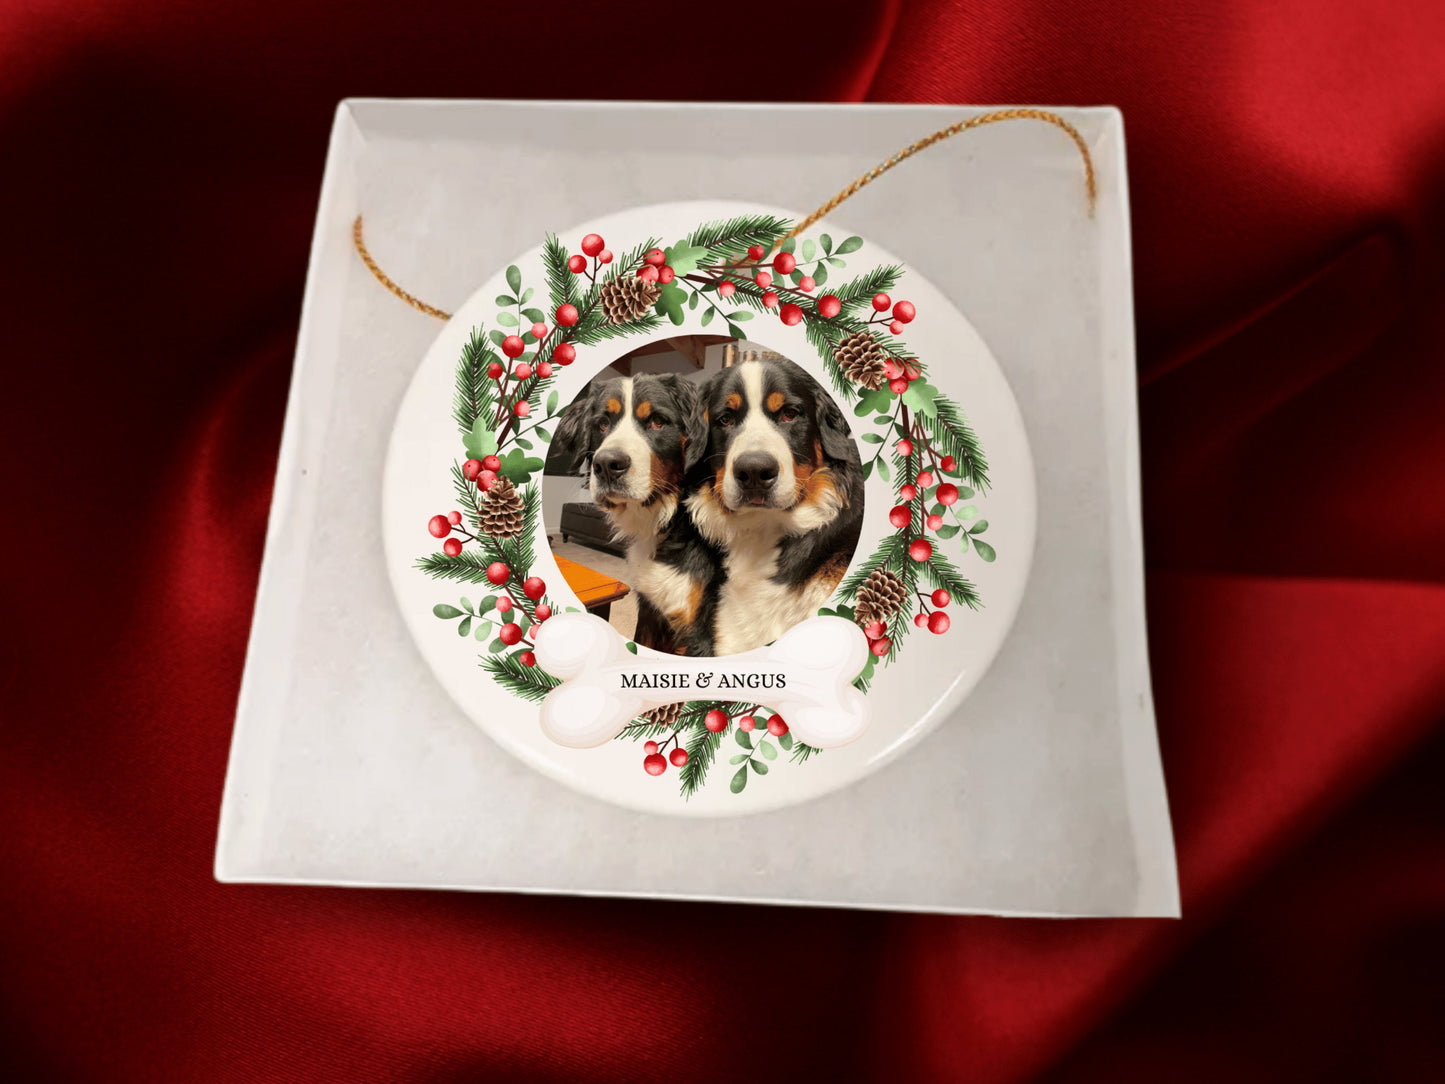 Personalized Pet Ornament, Custom Dog Christmas Ornament, Pet Memorial Ornament, Cat Christmas Photo Ornament, Pet Portrait Name Gift